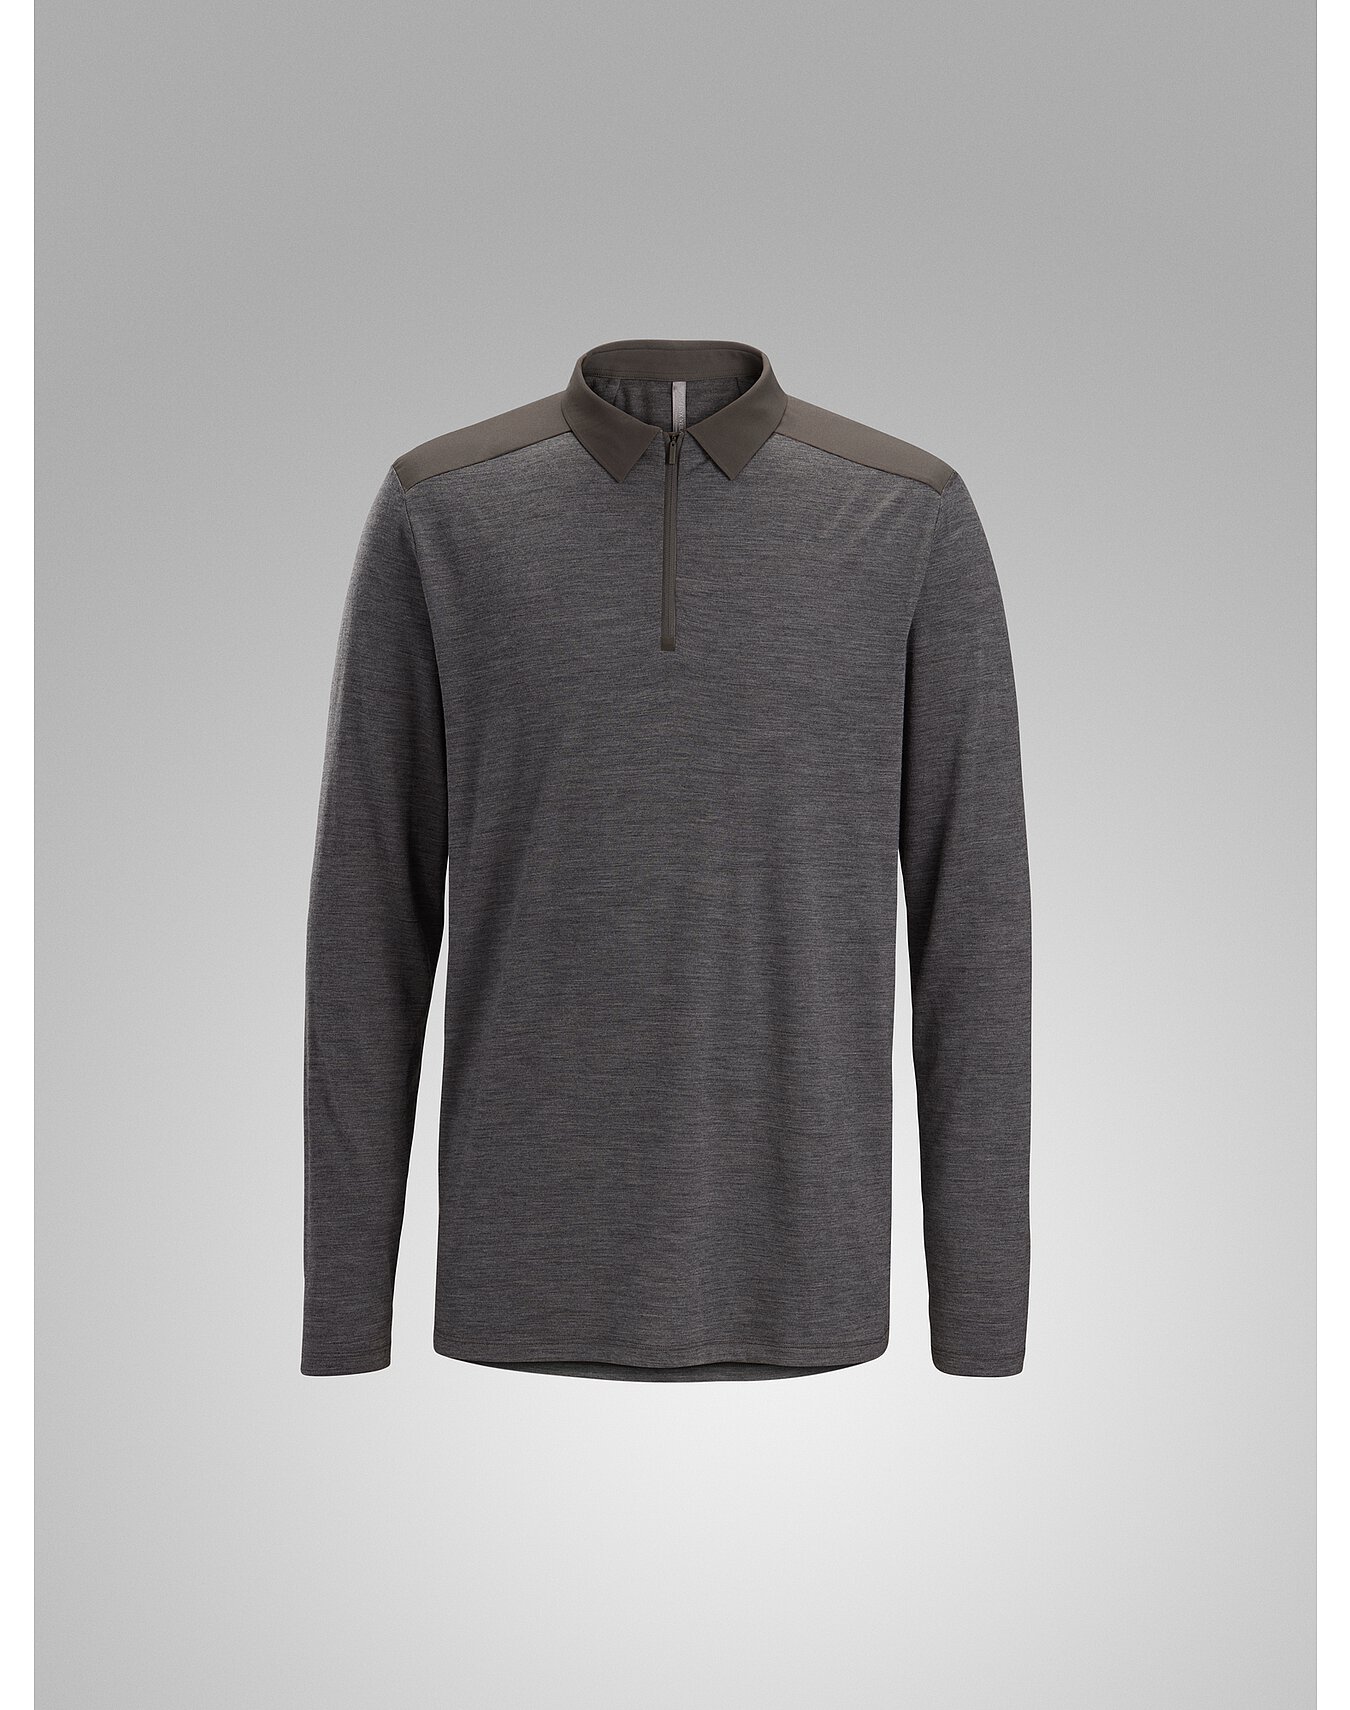 Frame Polo Shirt LS Men's | Arc'teryx Outlet